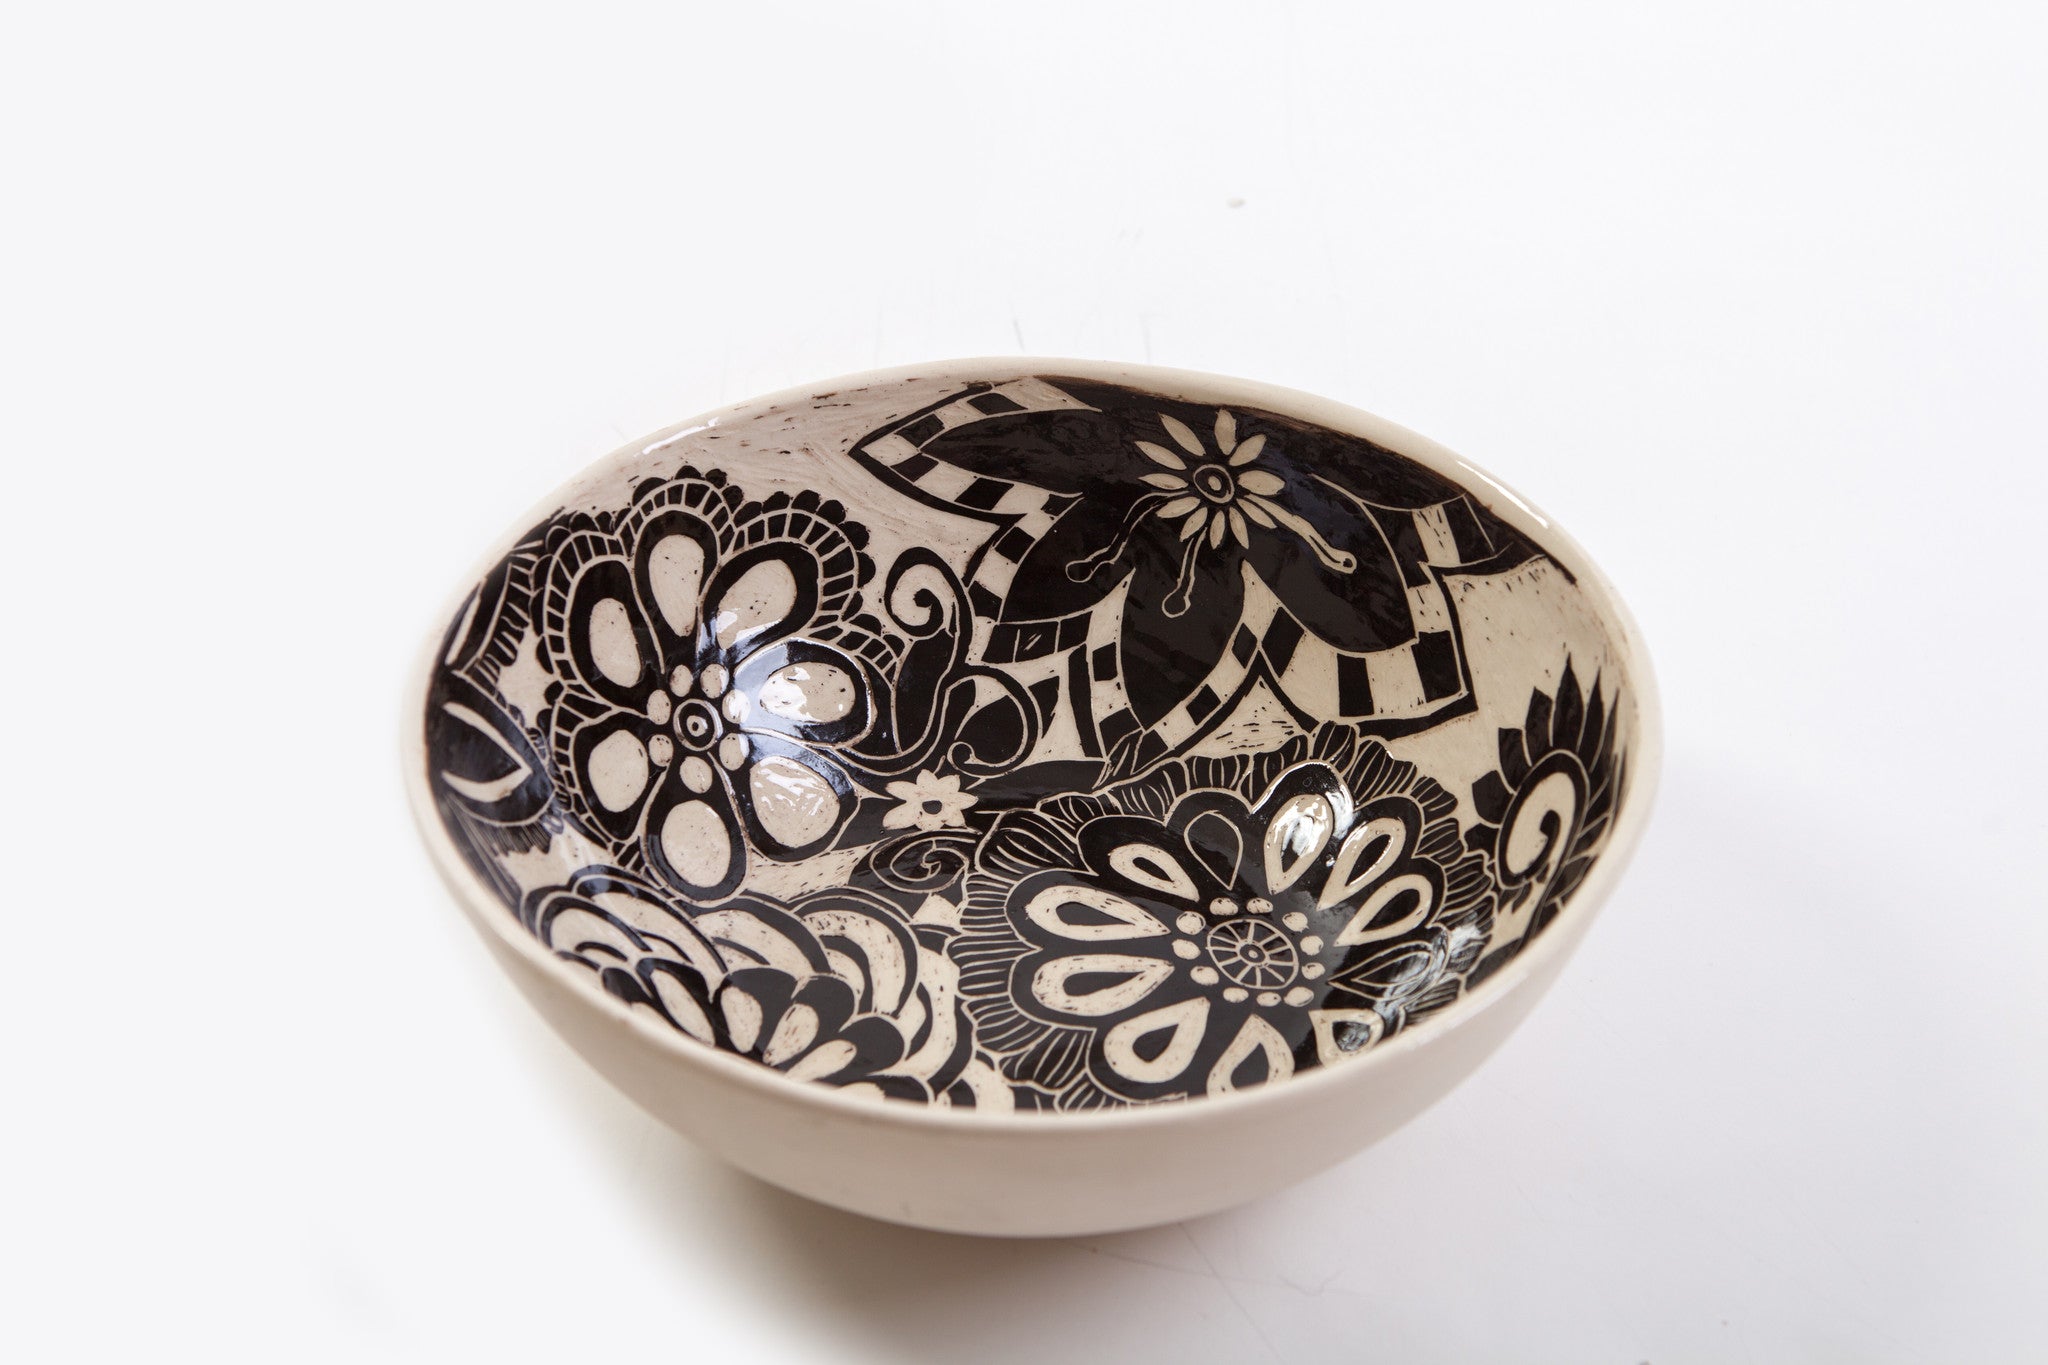 Glazed Black and White Sgraffito Ceramic Bowl with Flower Motif